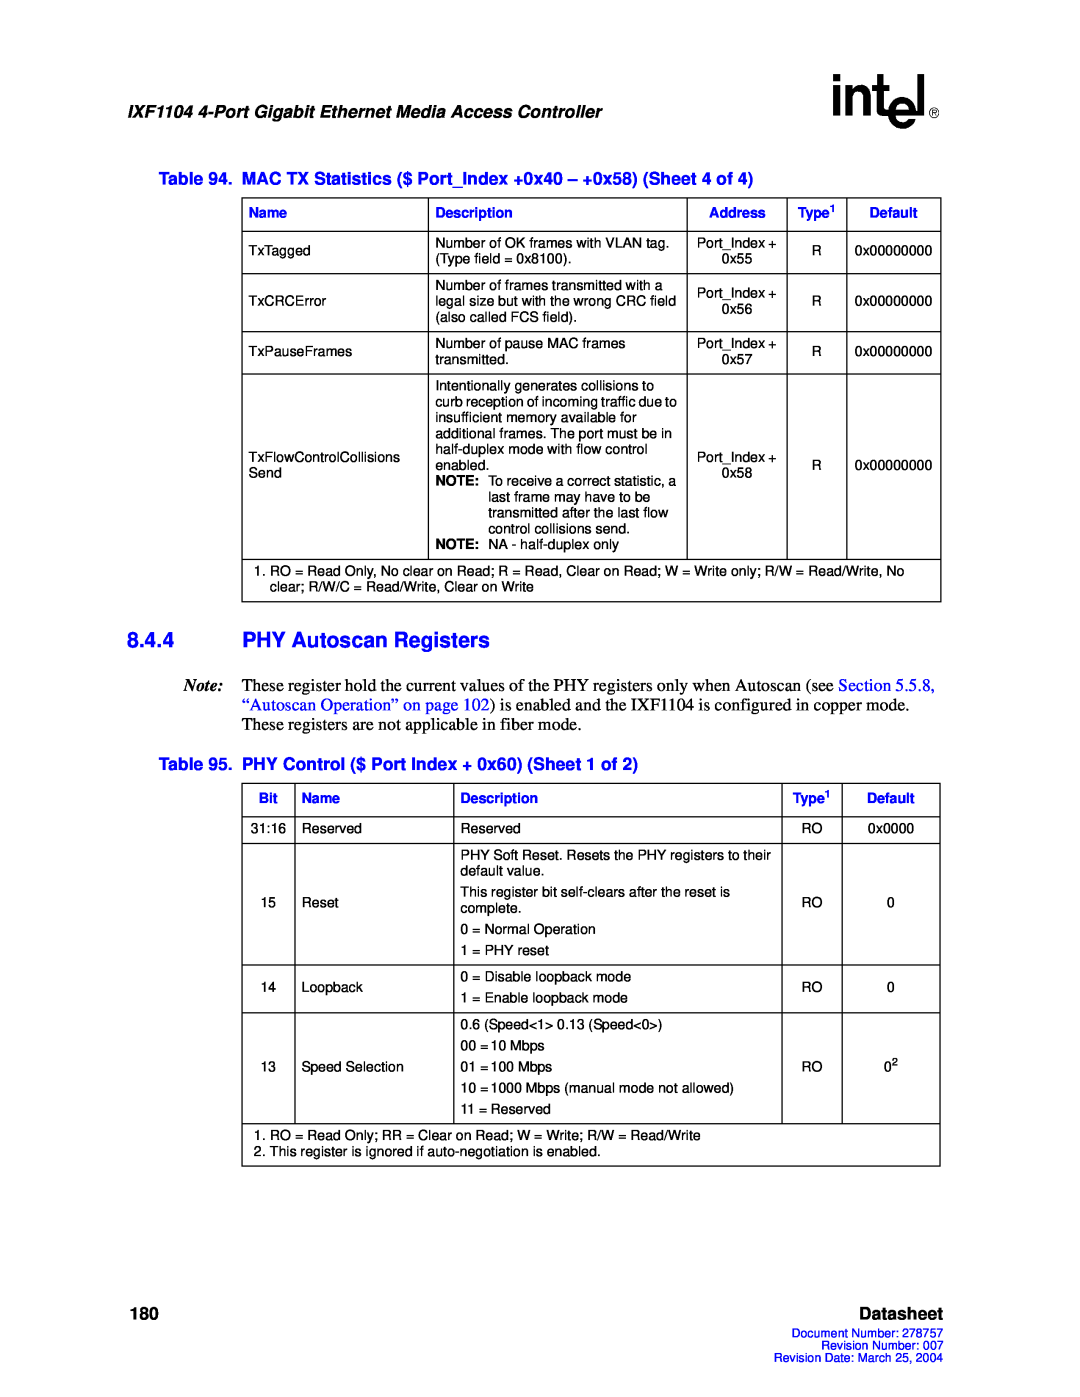 Intel IXF1104 manual 8.4.4PHY Autoscan Registers, Datasheet 